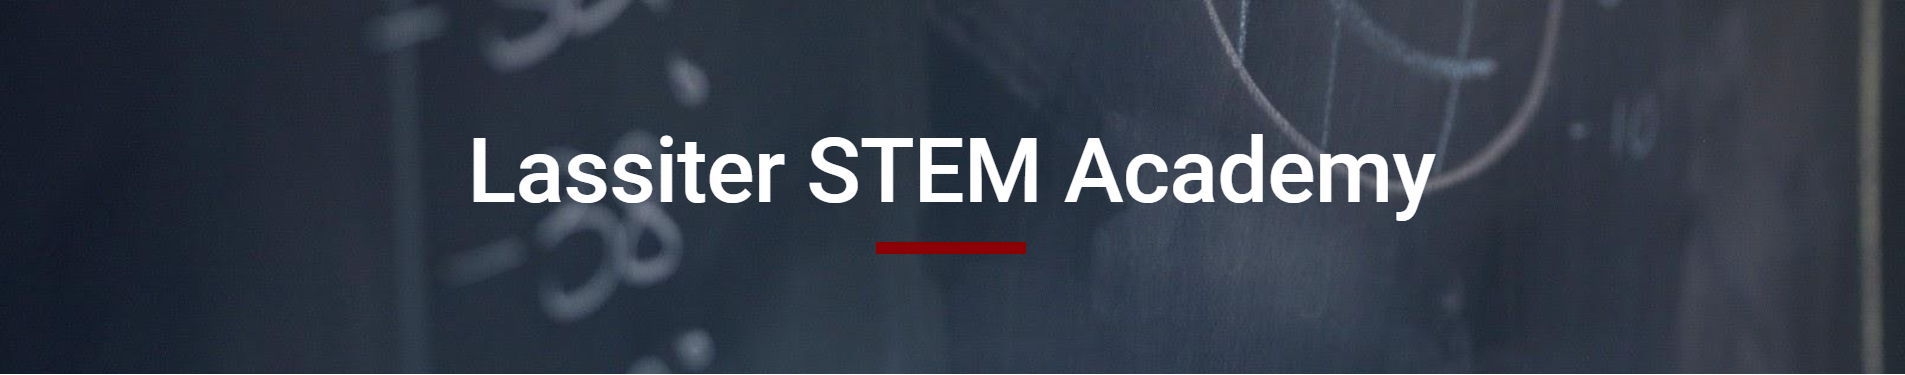 Lassiter STEM Academy Logo.png